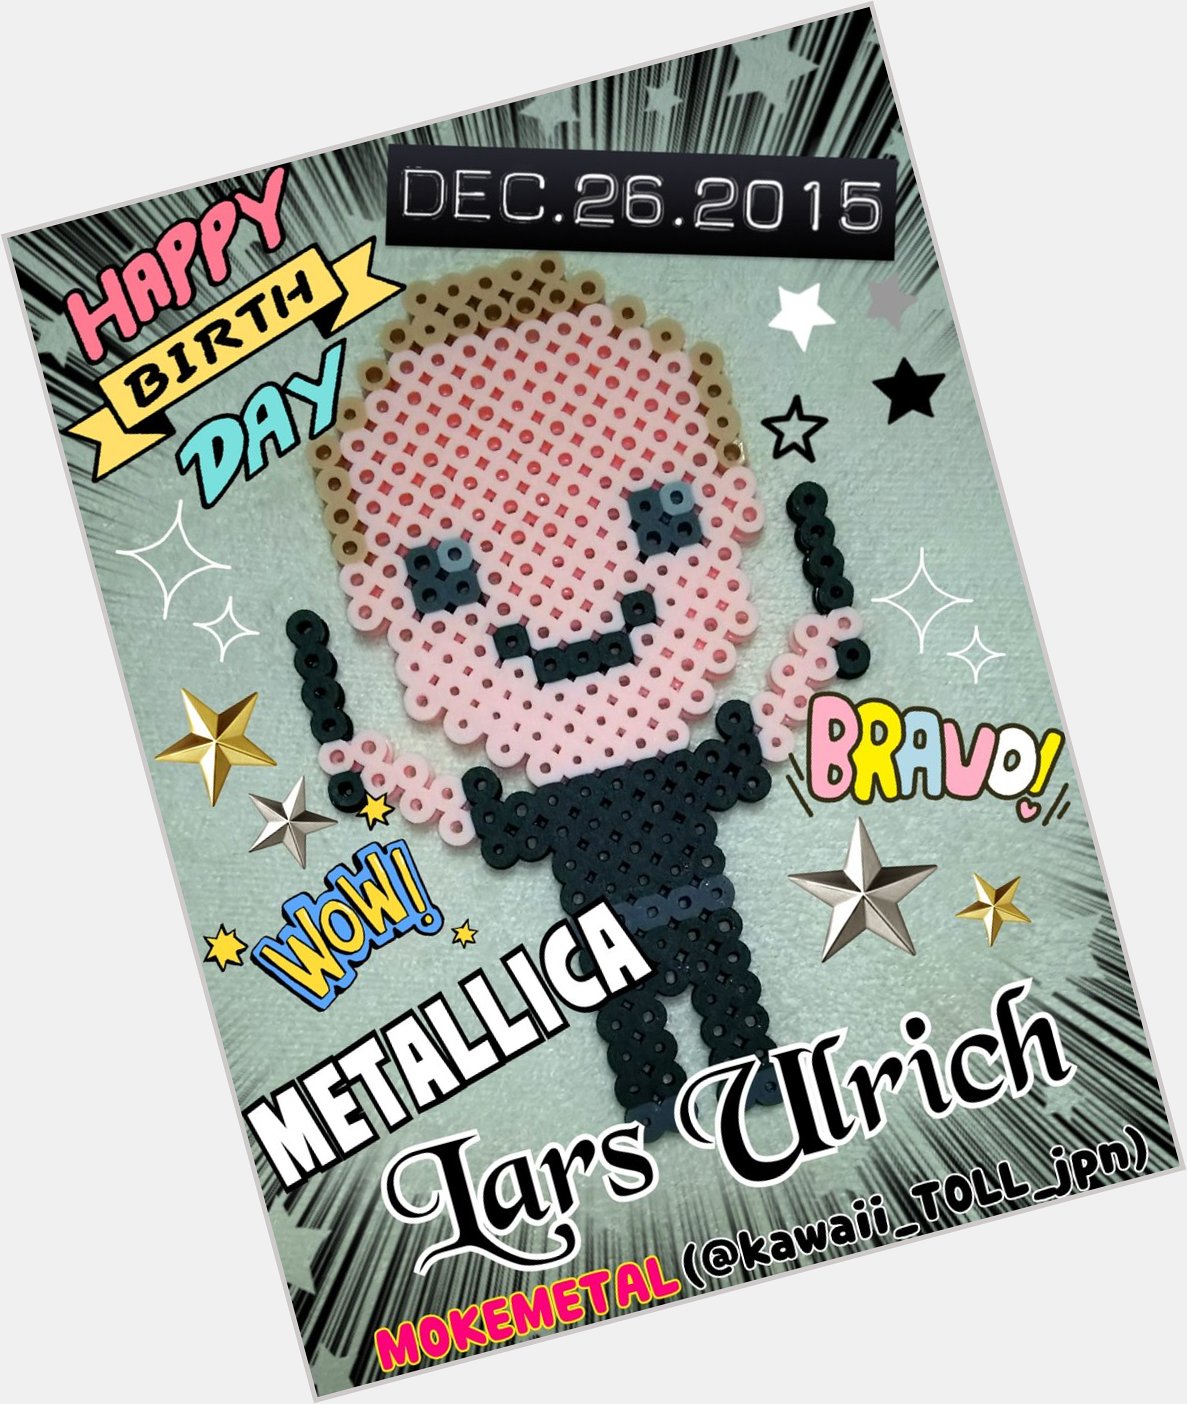 HAPPY BIRTHDAY Lars Ulrich!!!(METALLICA )
I made this.     